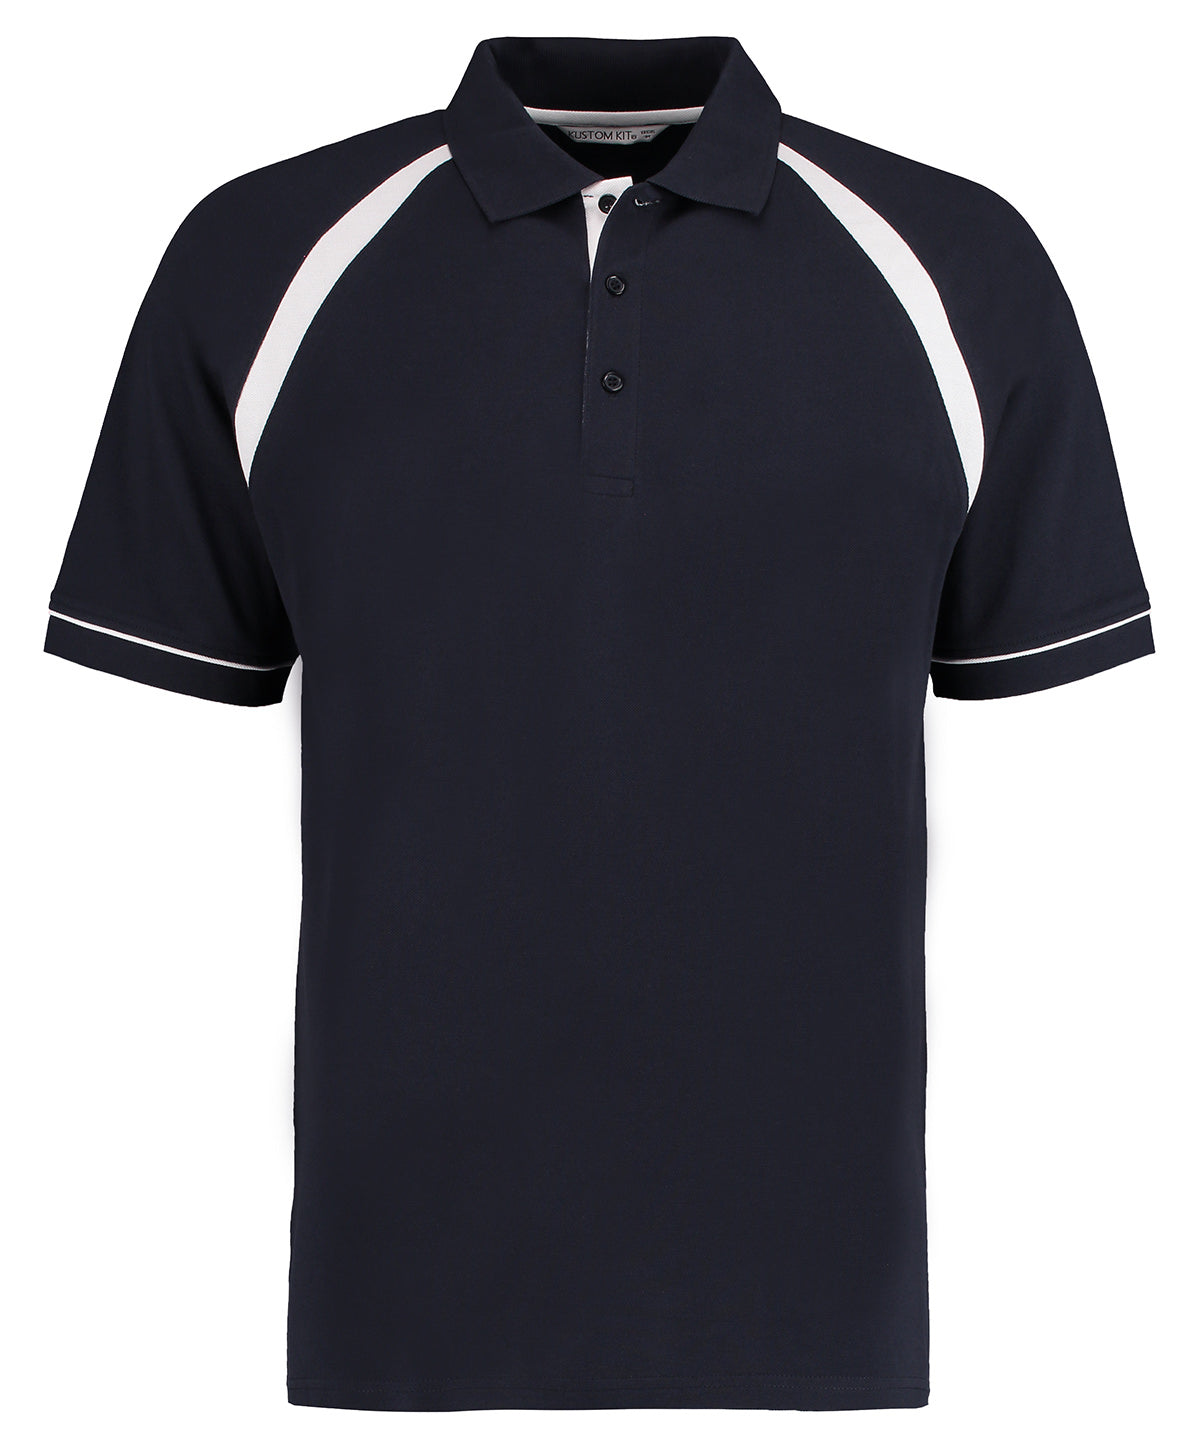 Personalised Polo Shirts - Black Kustom Kit Oak hill polo (classic fit)